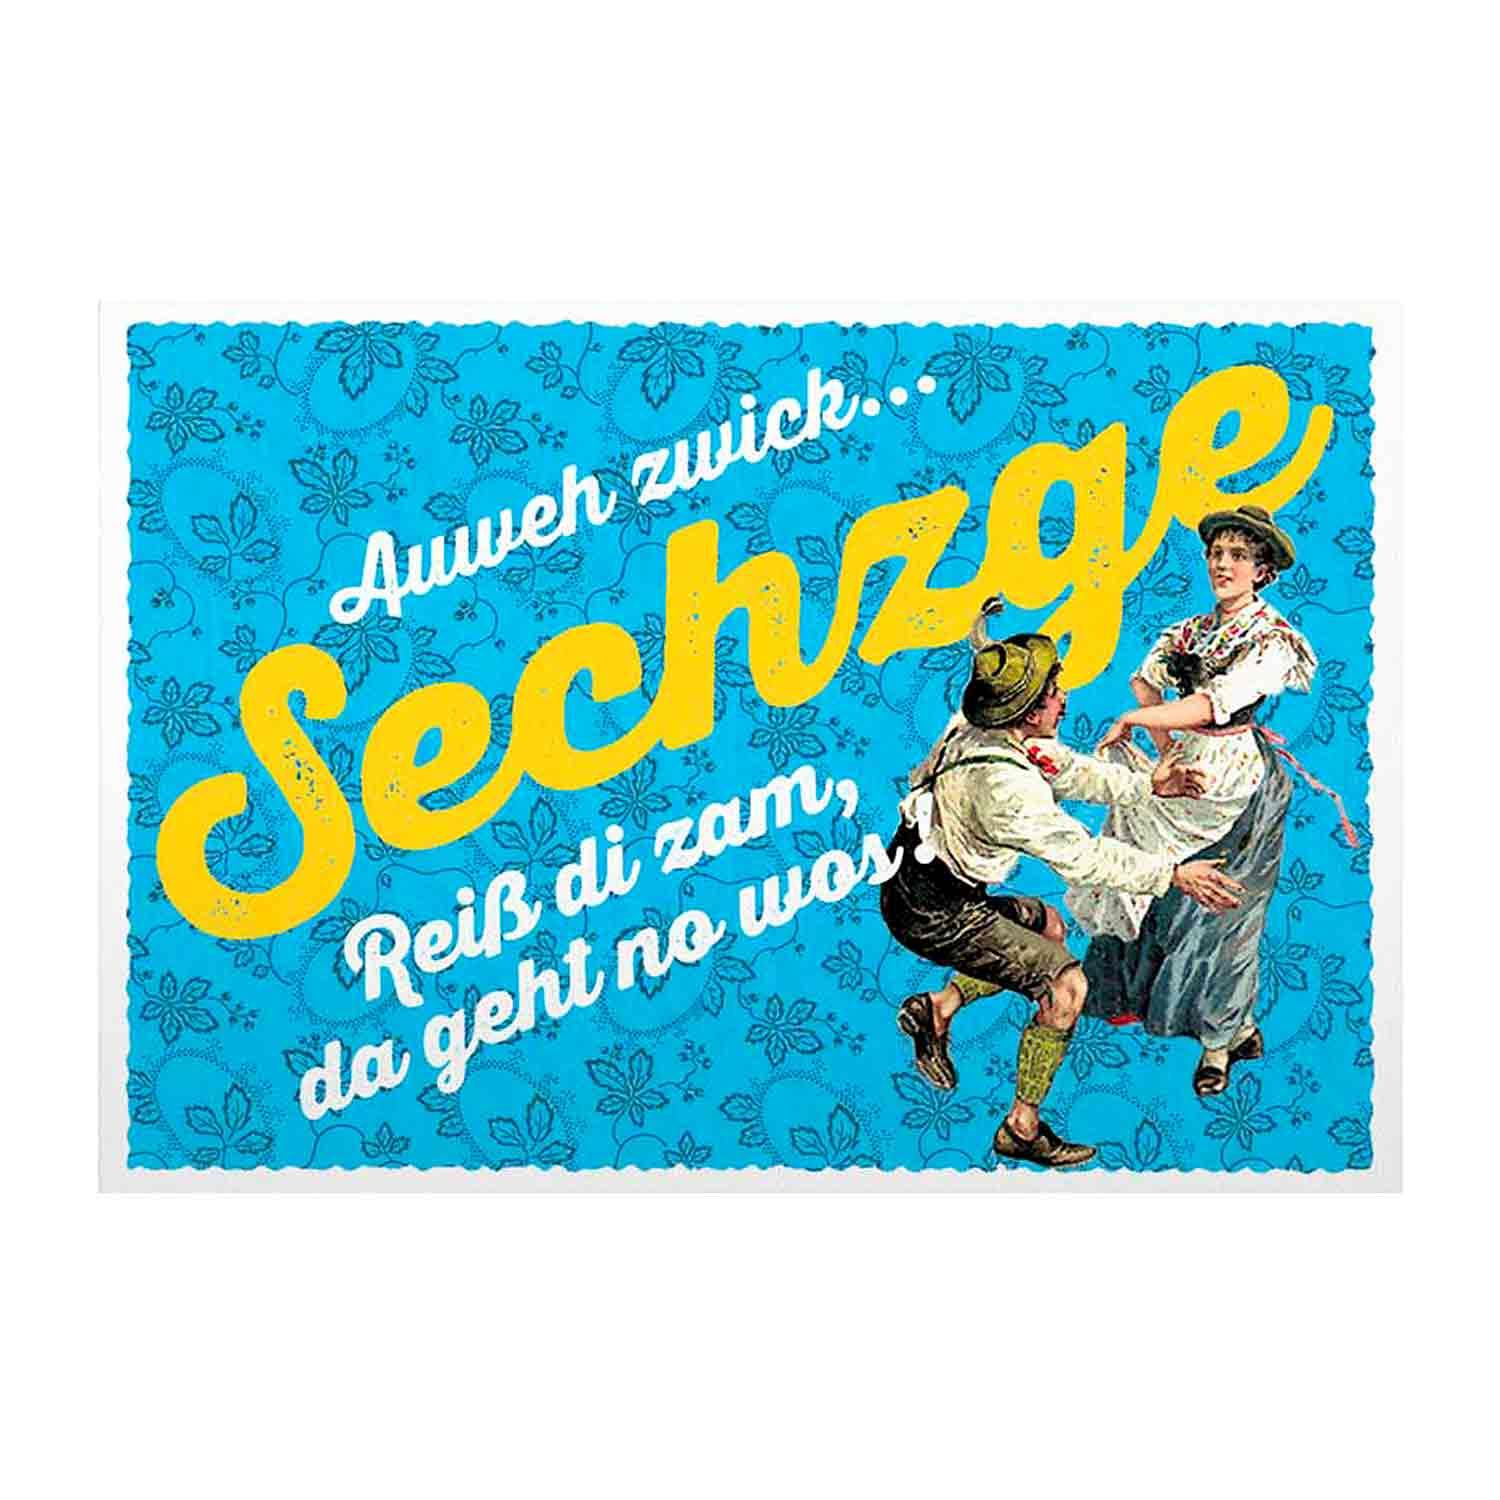 Geburtstagskarte zum 60. "Sechzge" - bavariashop - mei LebensGfui